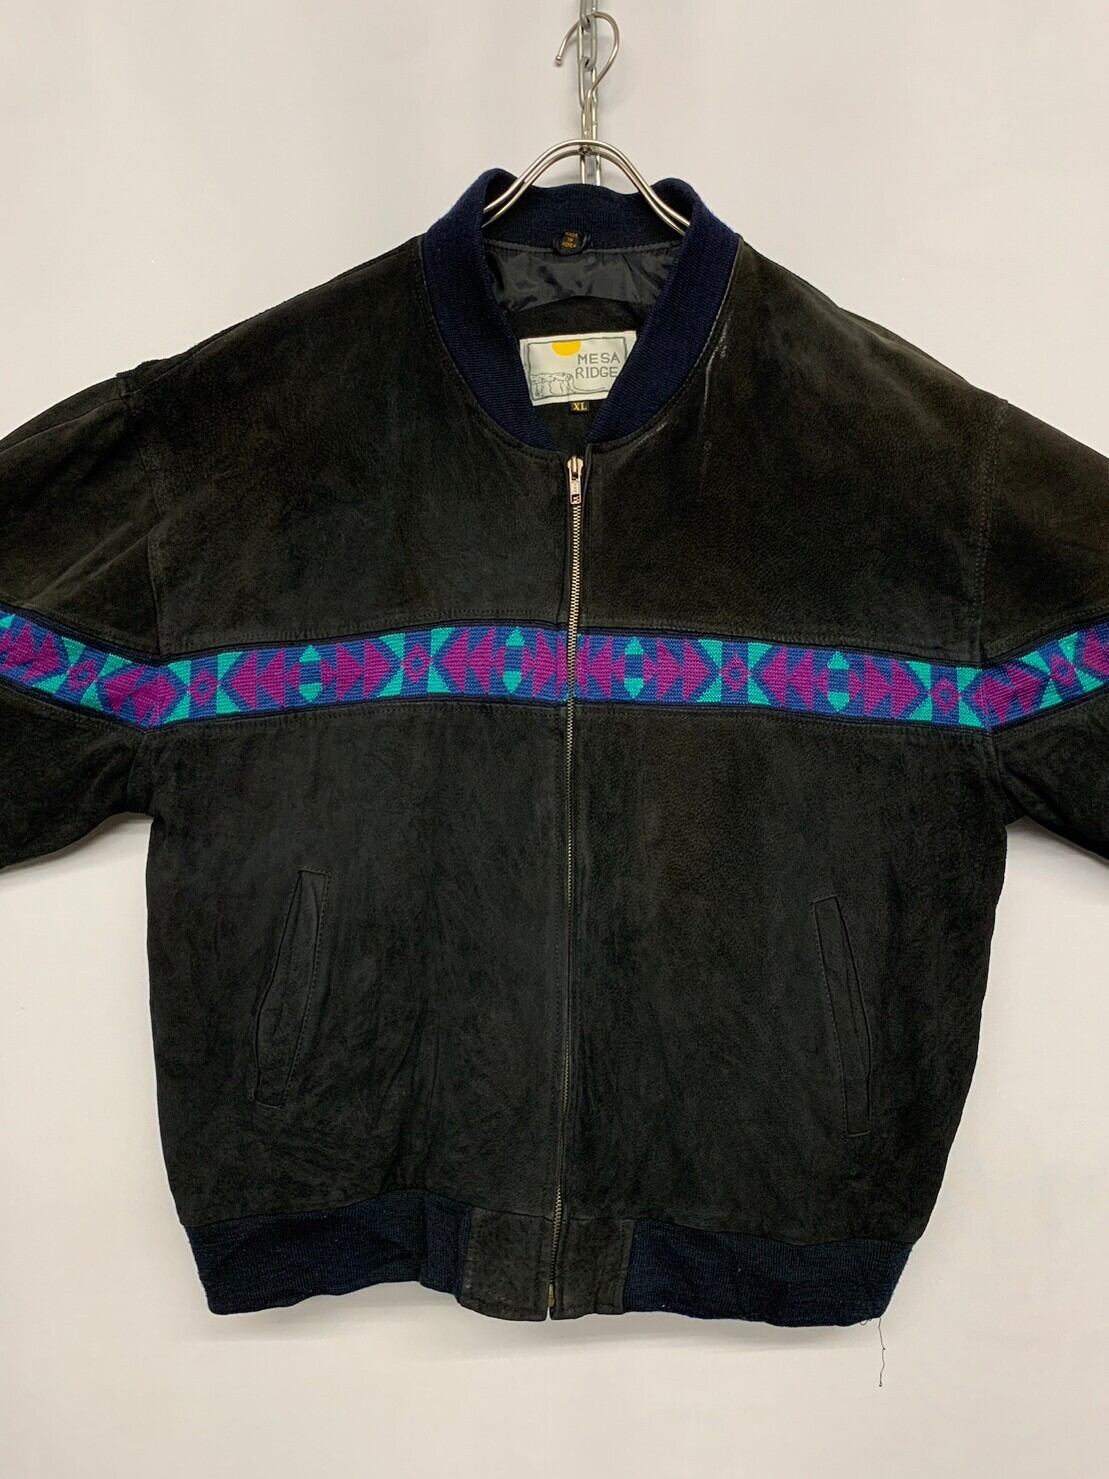 “MESA RIDGE” Native Line Leather Jacket